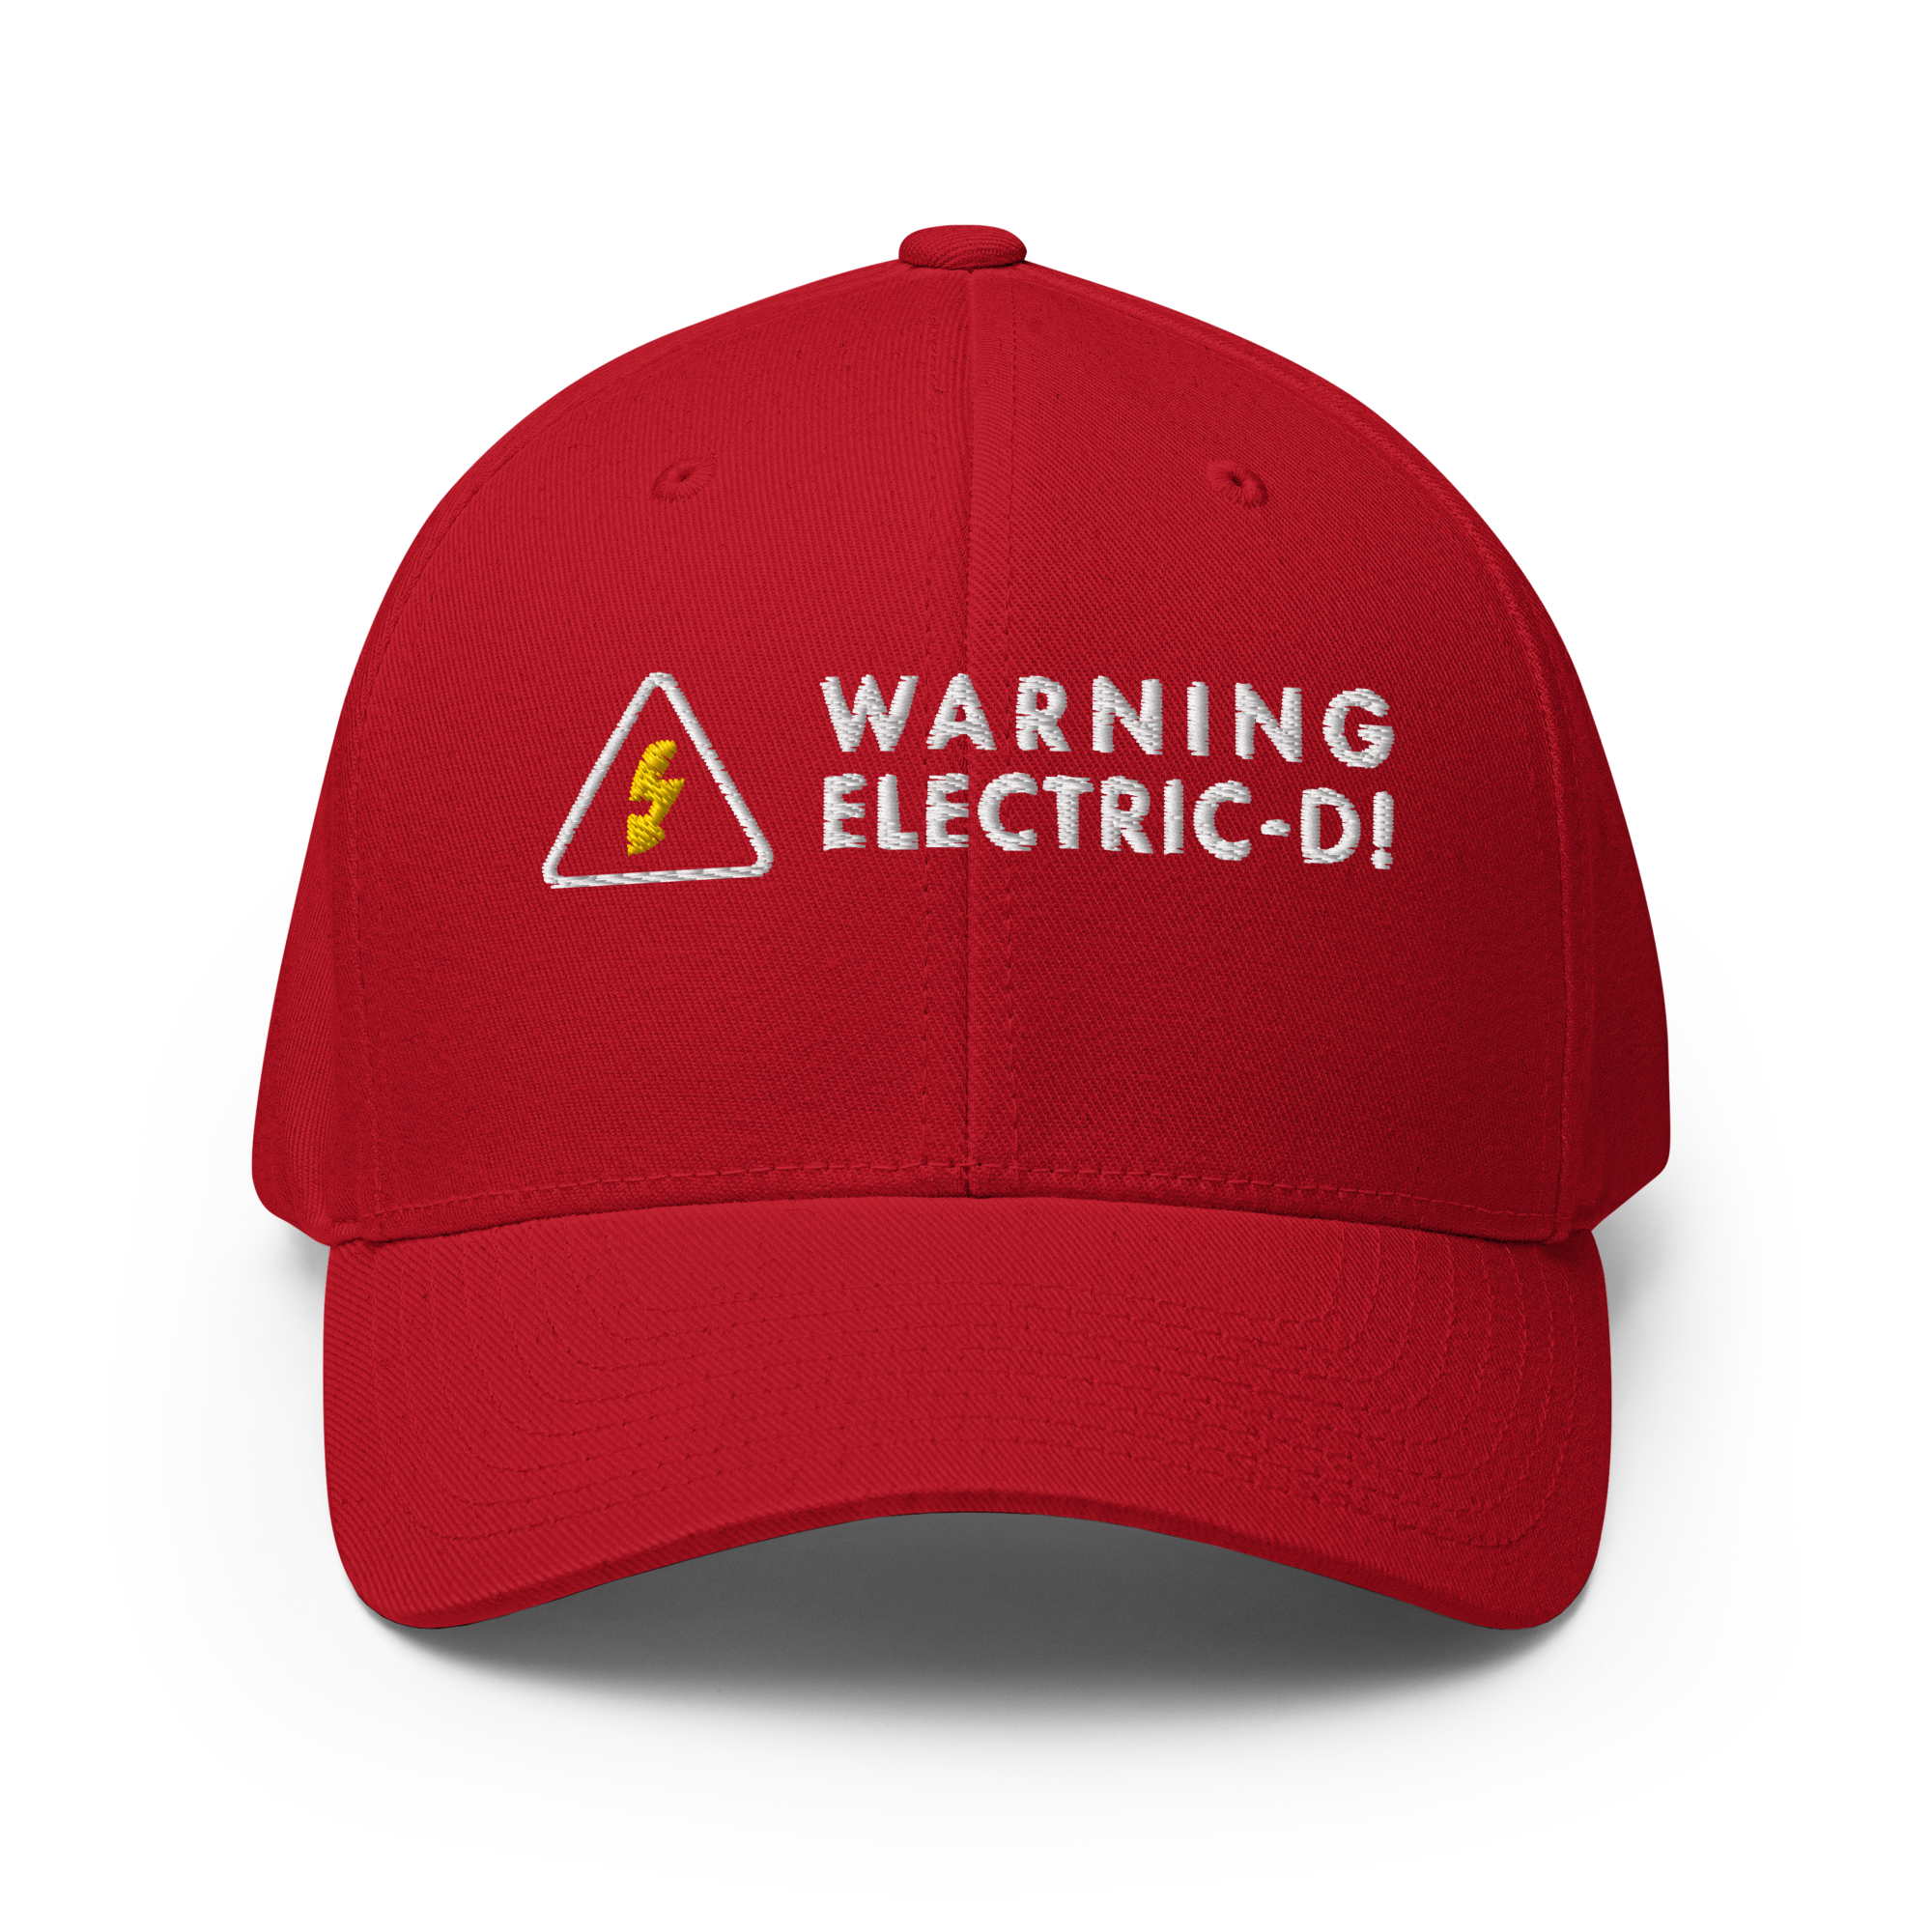 Electric-D! Player Cap